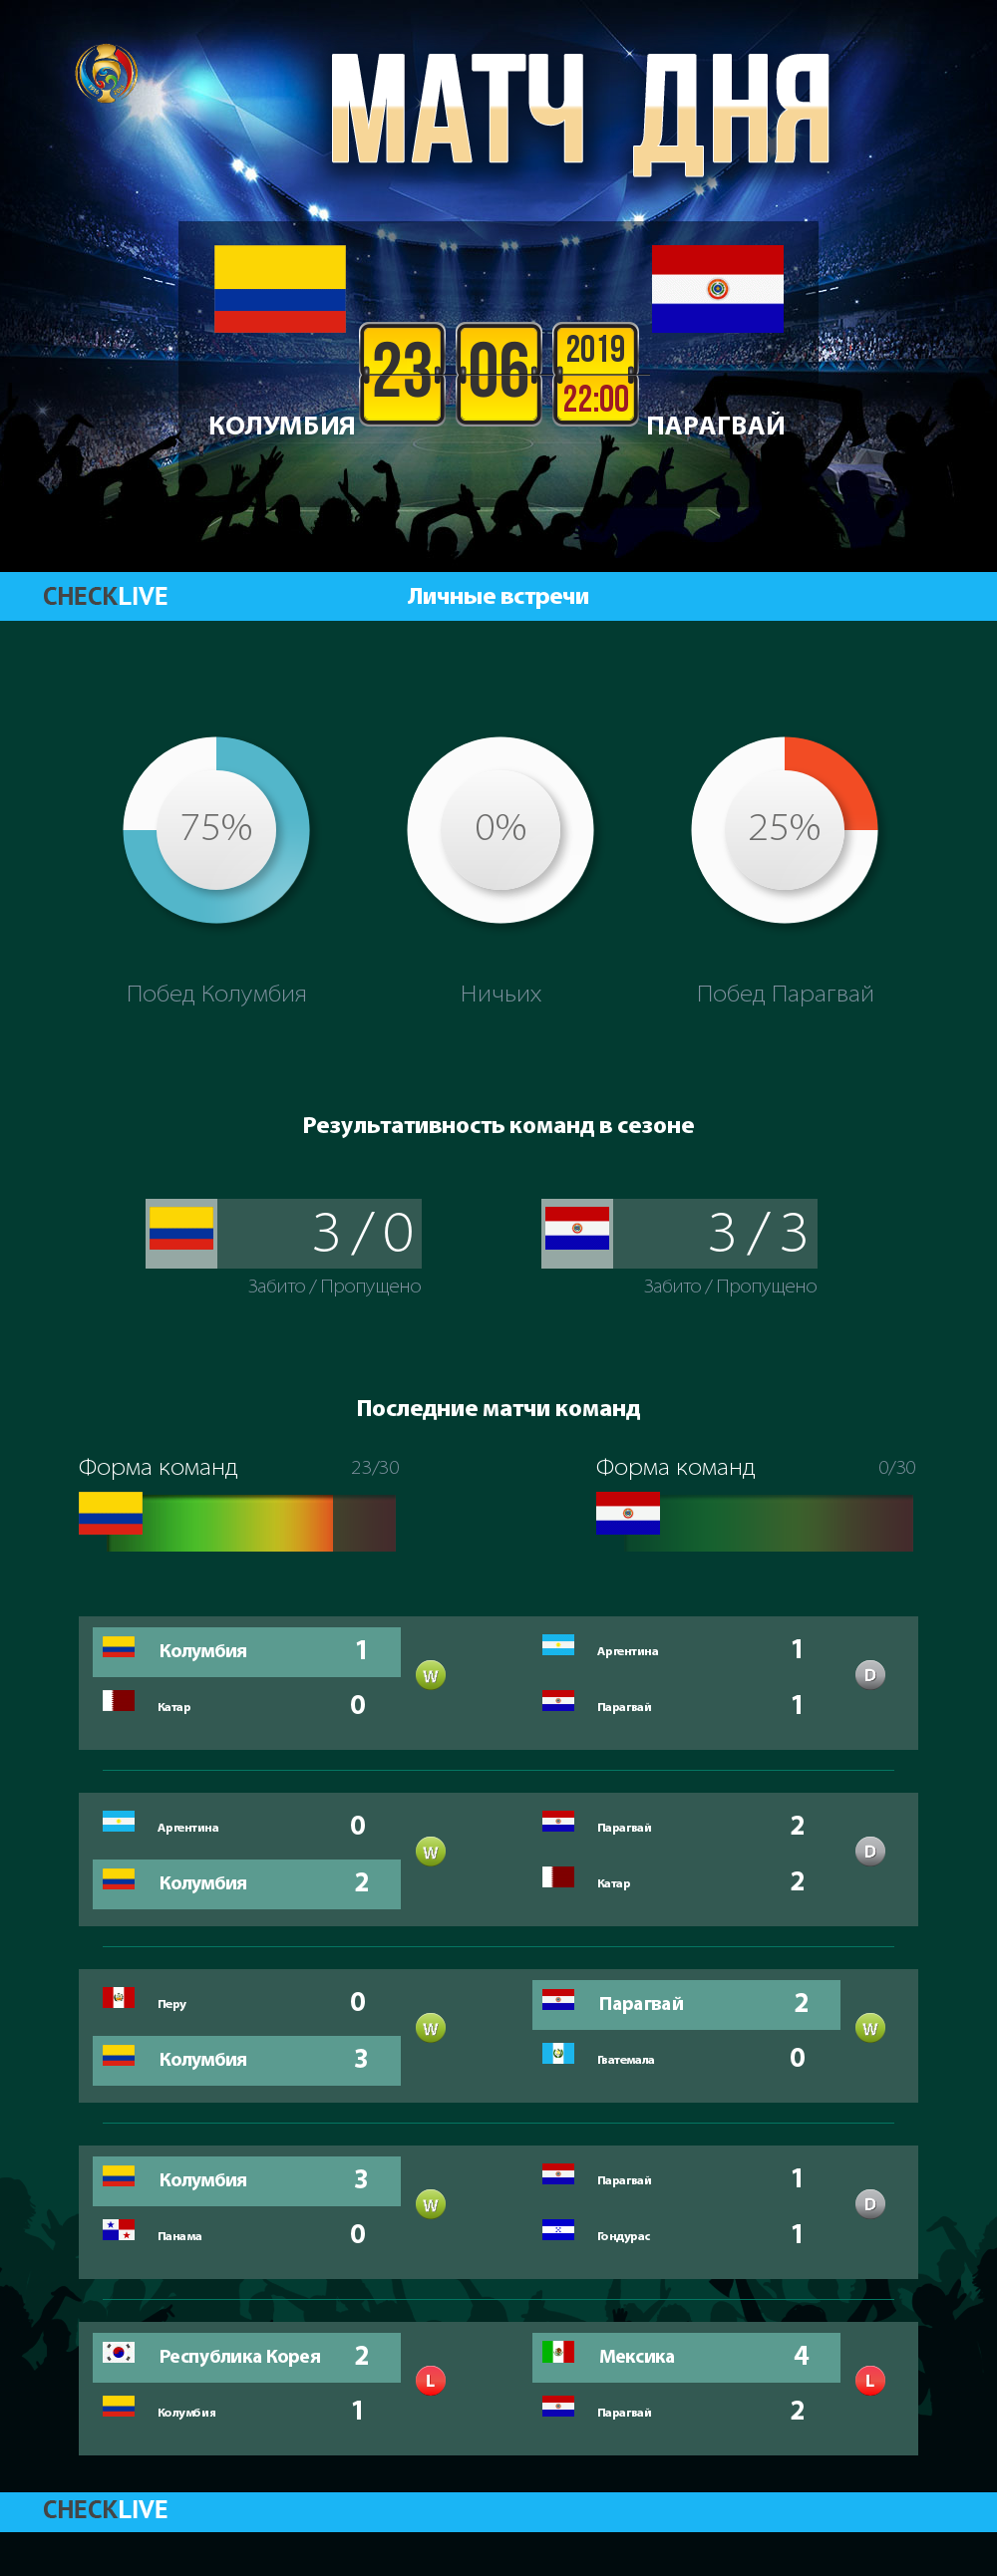 Инфографика Колумбия и Парагвай матч дня 23.06.2019